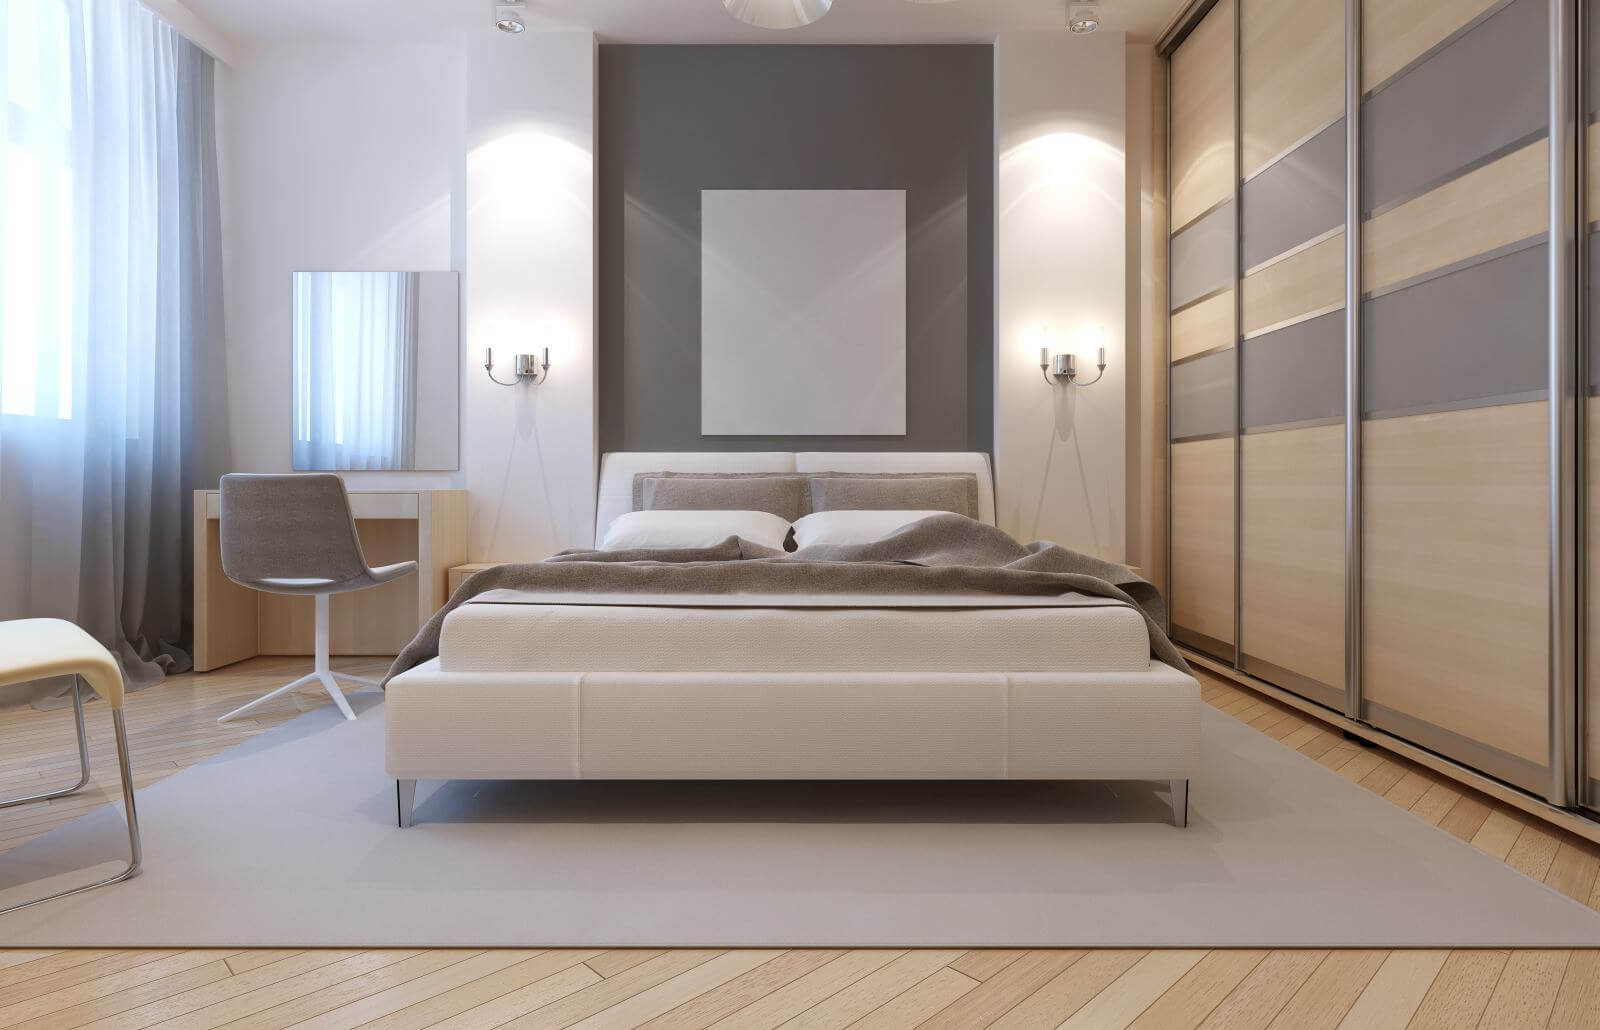 Master bedroom avangard design. Soft double bed, dressing table, closet with sliding doors. 3D render